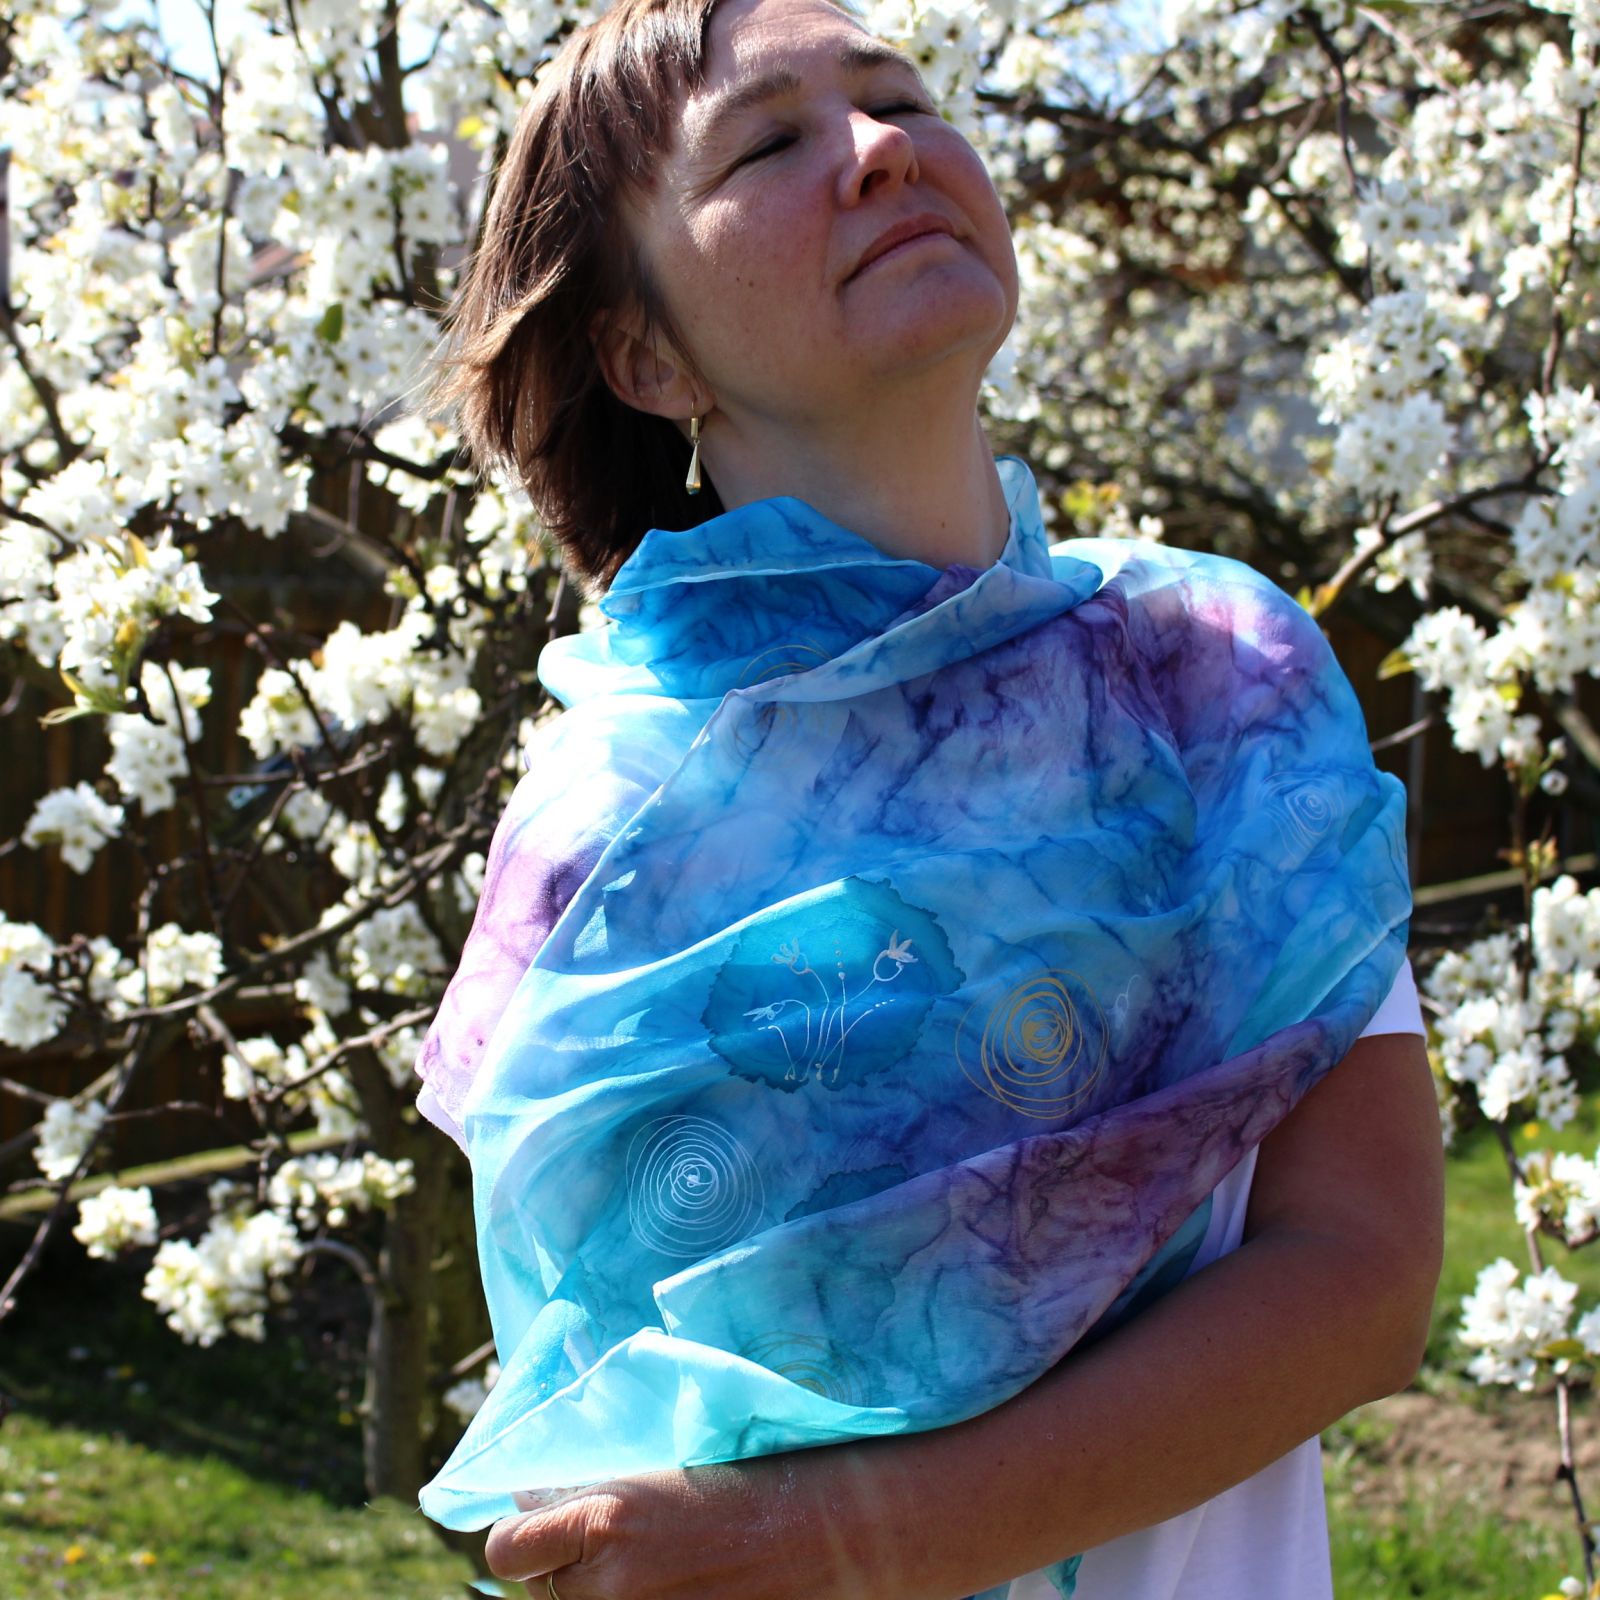 Hedvábná malovaná šála - Hnízdečka jara Batitex - malovaná, batikovaná trička, mikiny, hedvábné šátky, šály, kravaty